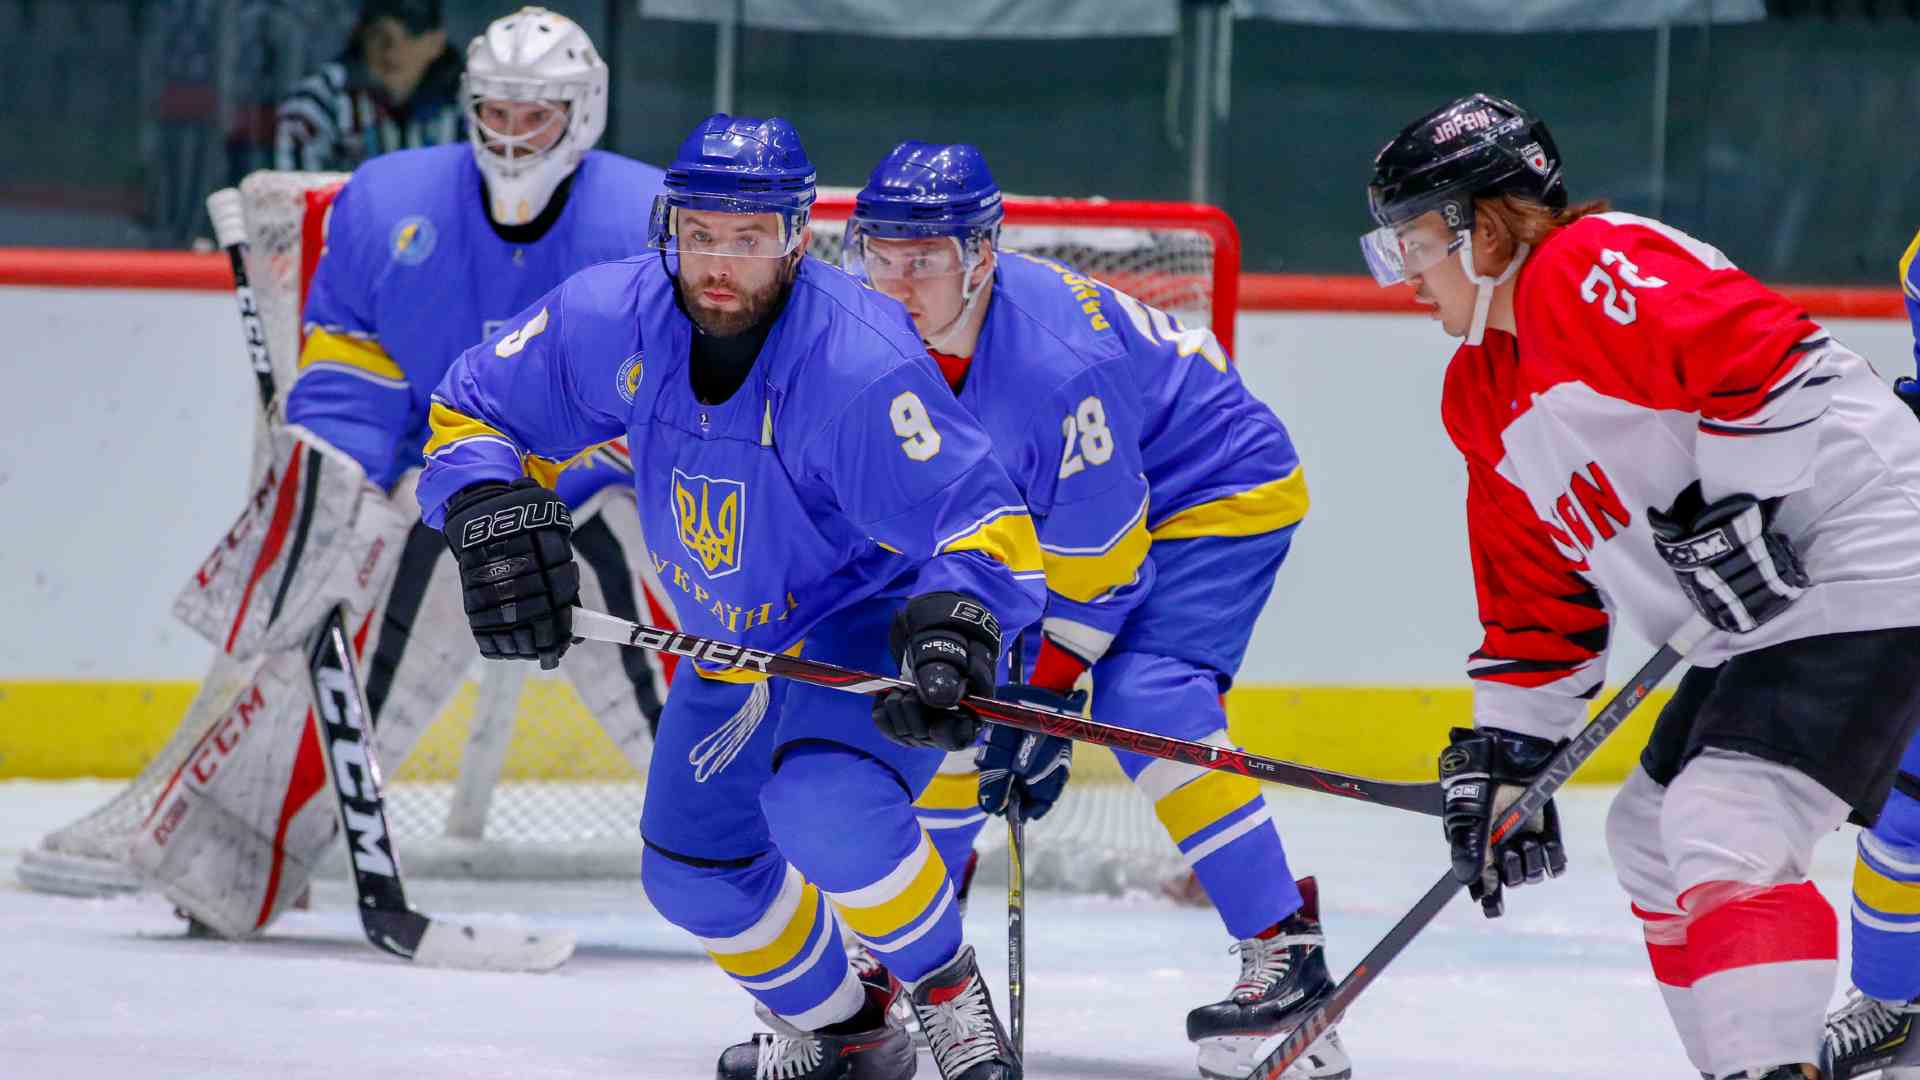 Ukraine Vs Slovenia International Tournament Hungary Will Be Held On November 11 Image NHL1 